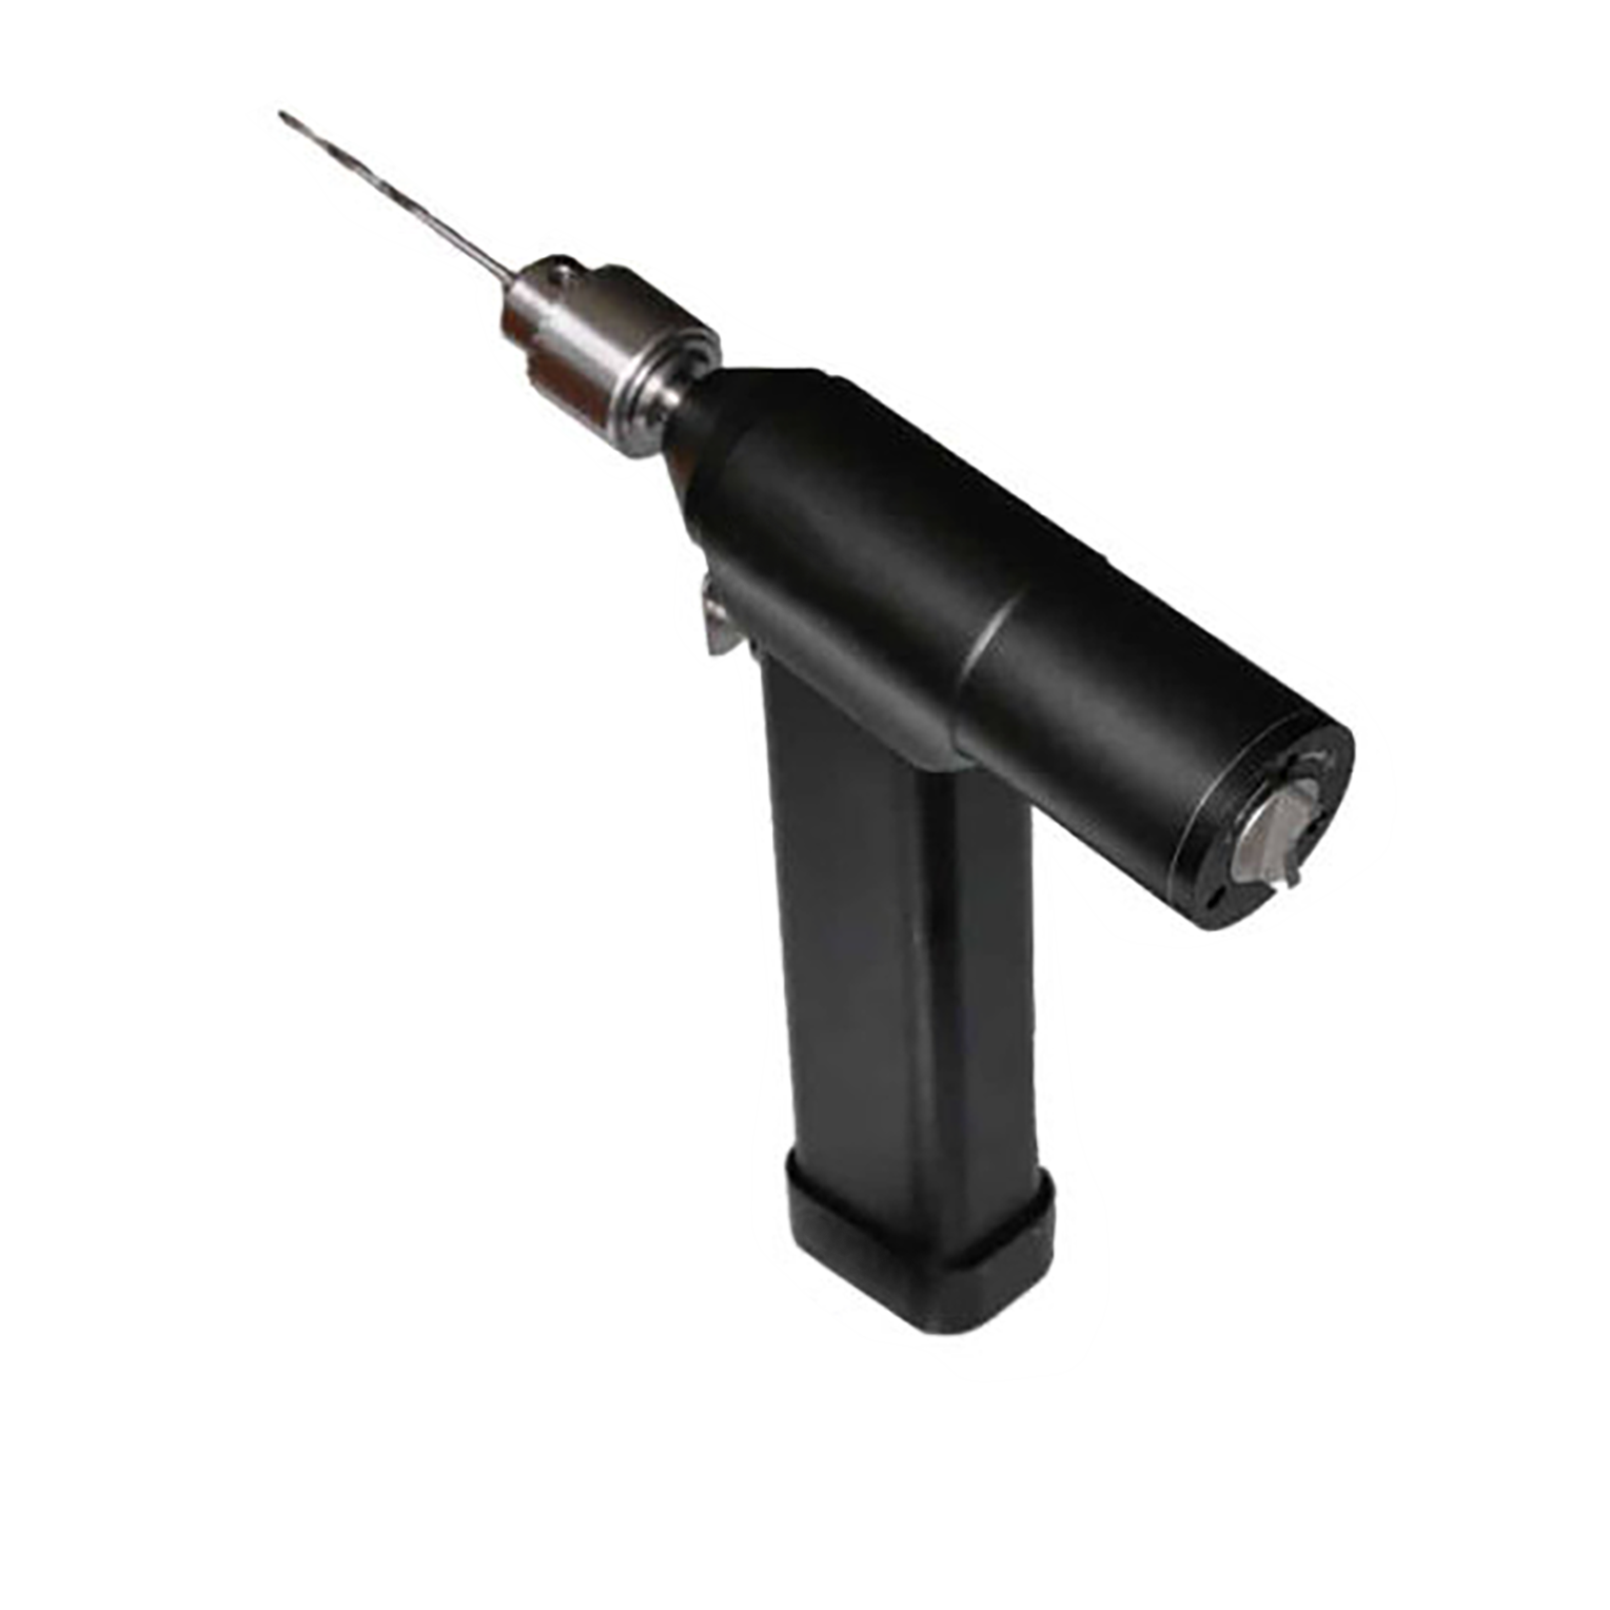 Drill for proximal Locking